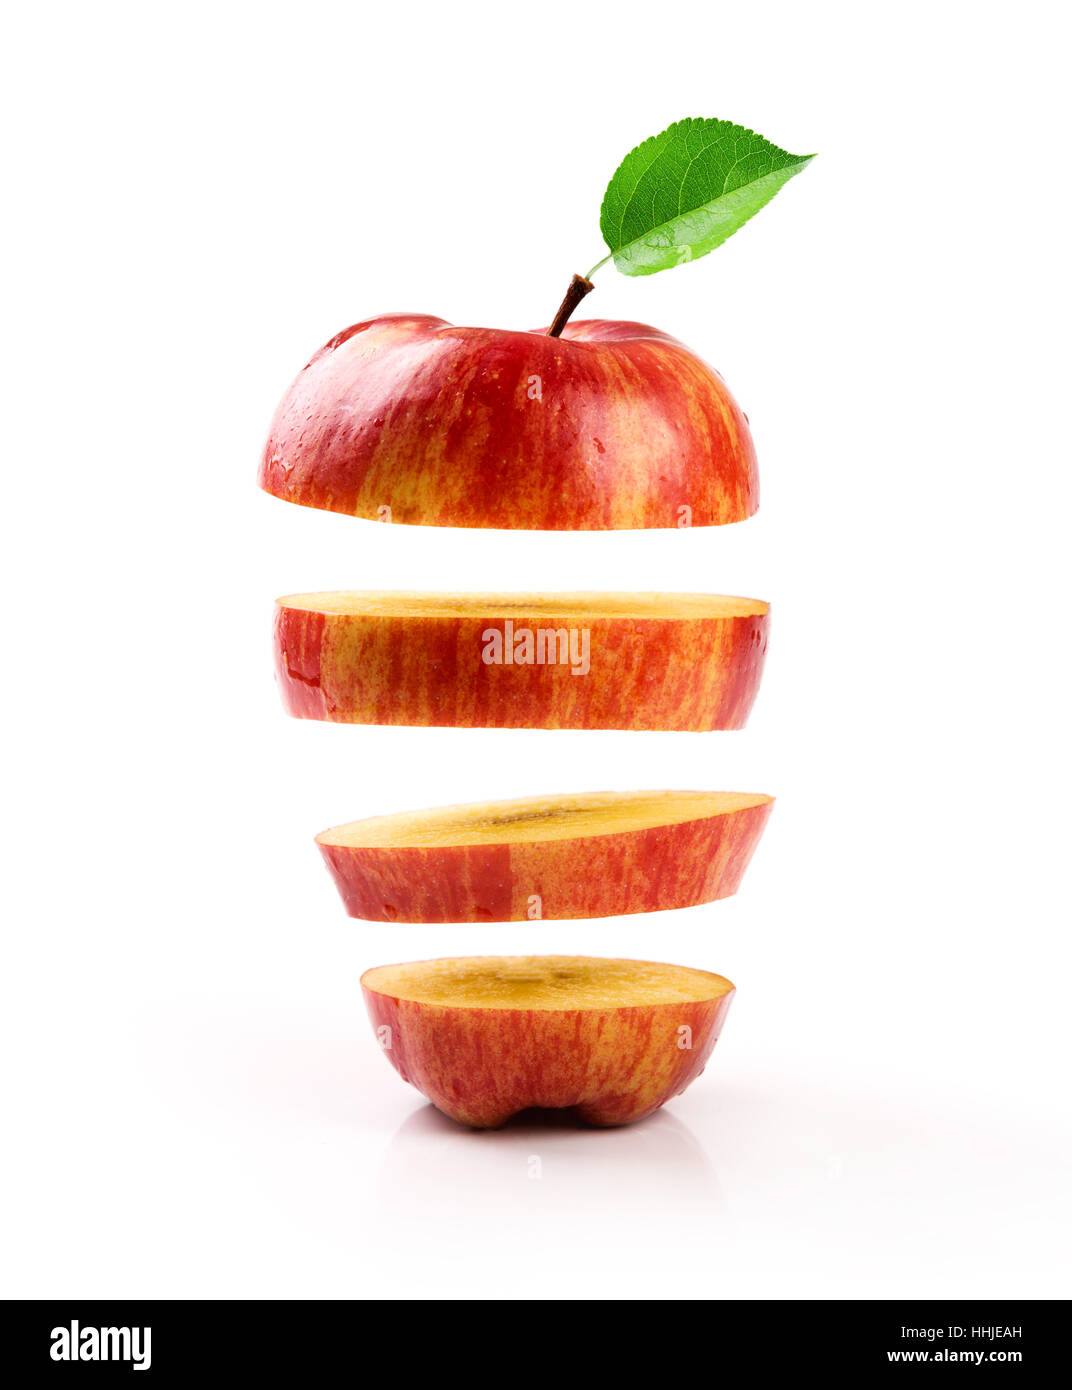 https://c8.alamy.com/comp/HHJEAH/sliced-red-apple-levitating-on-white-background-HHJEAH.jpg